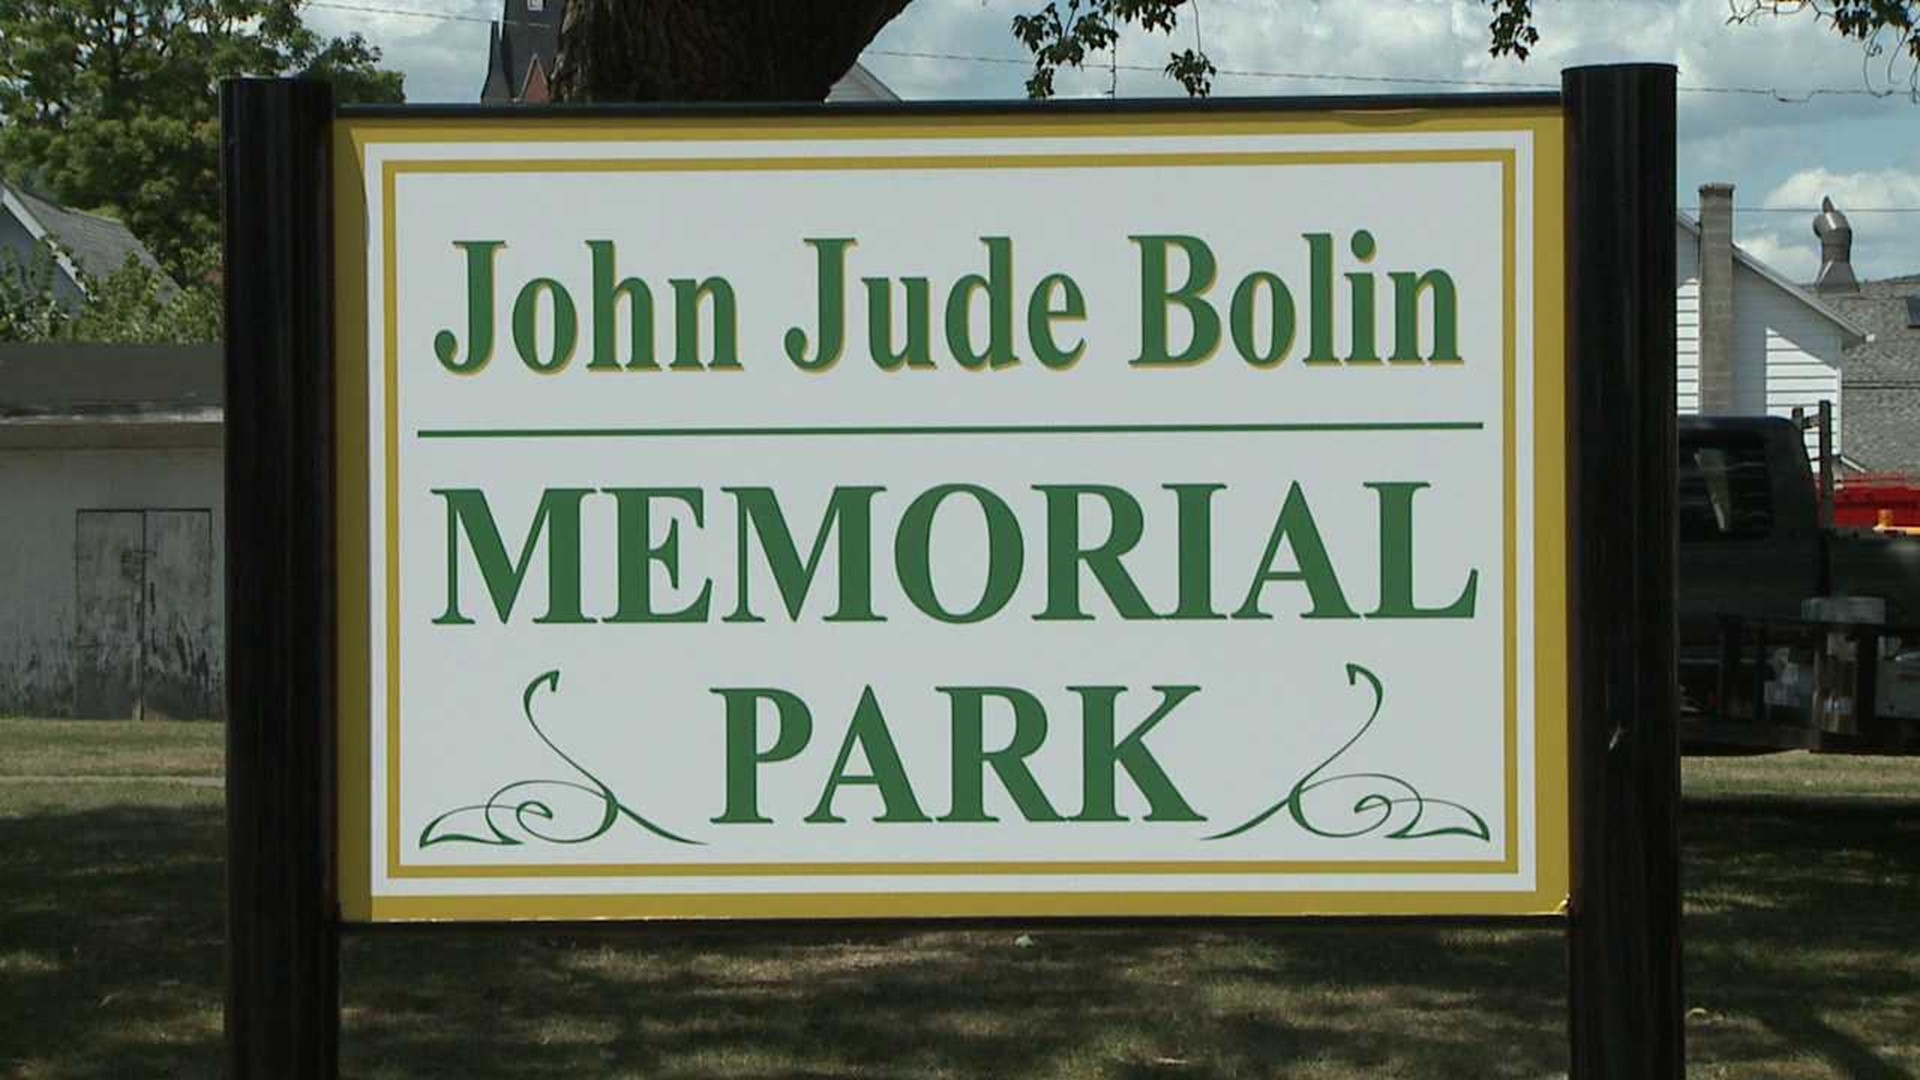 Park Renamed After Man Who Served Community